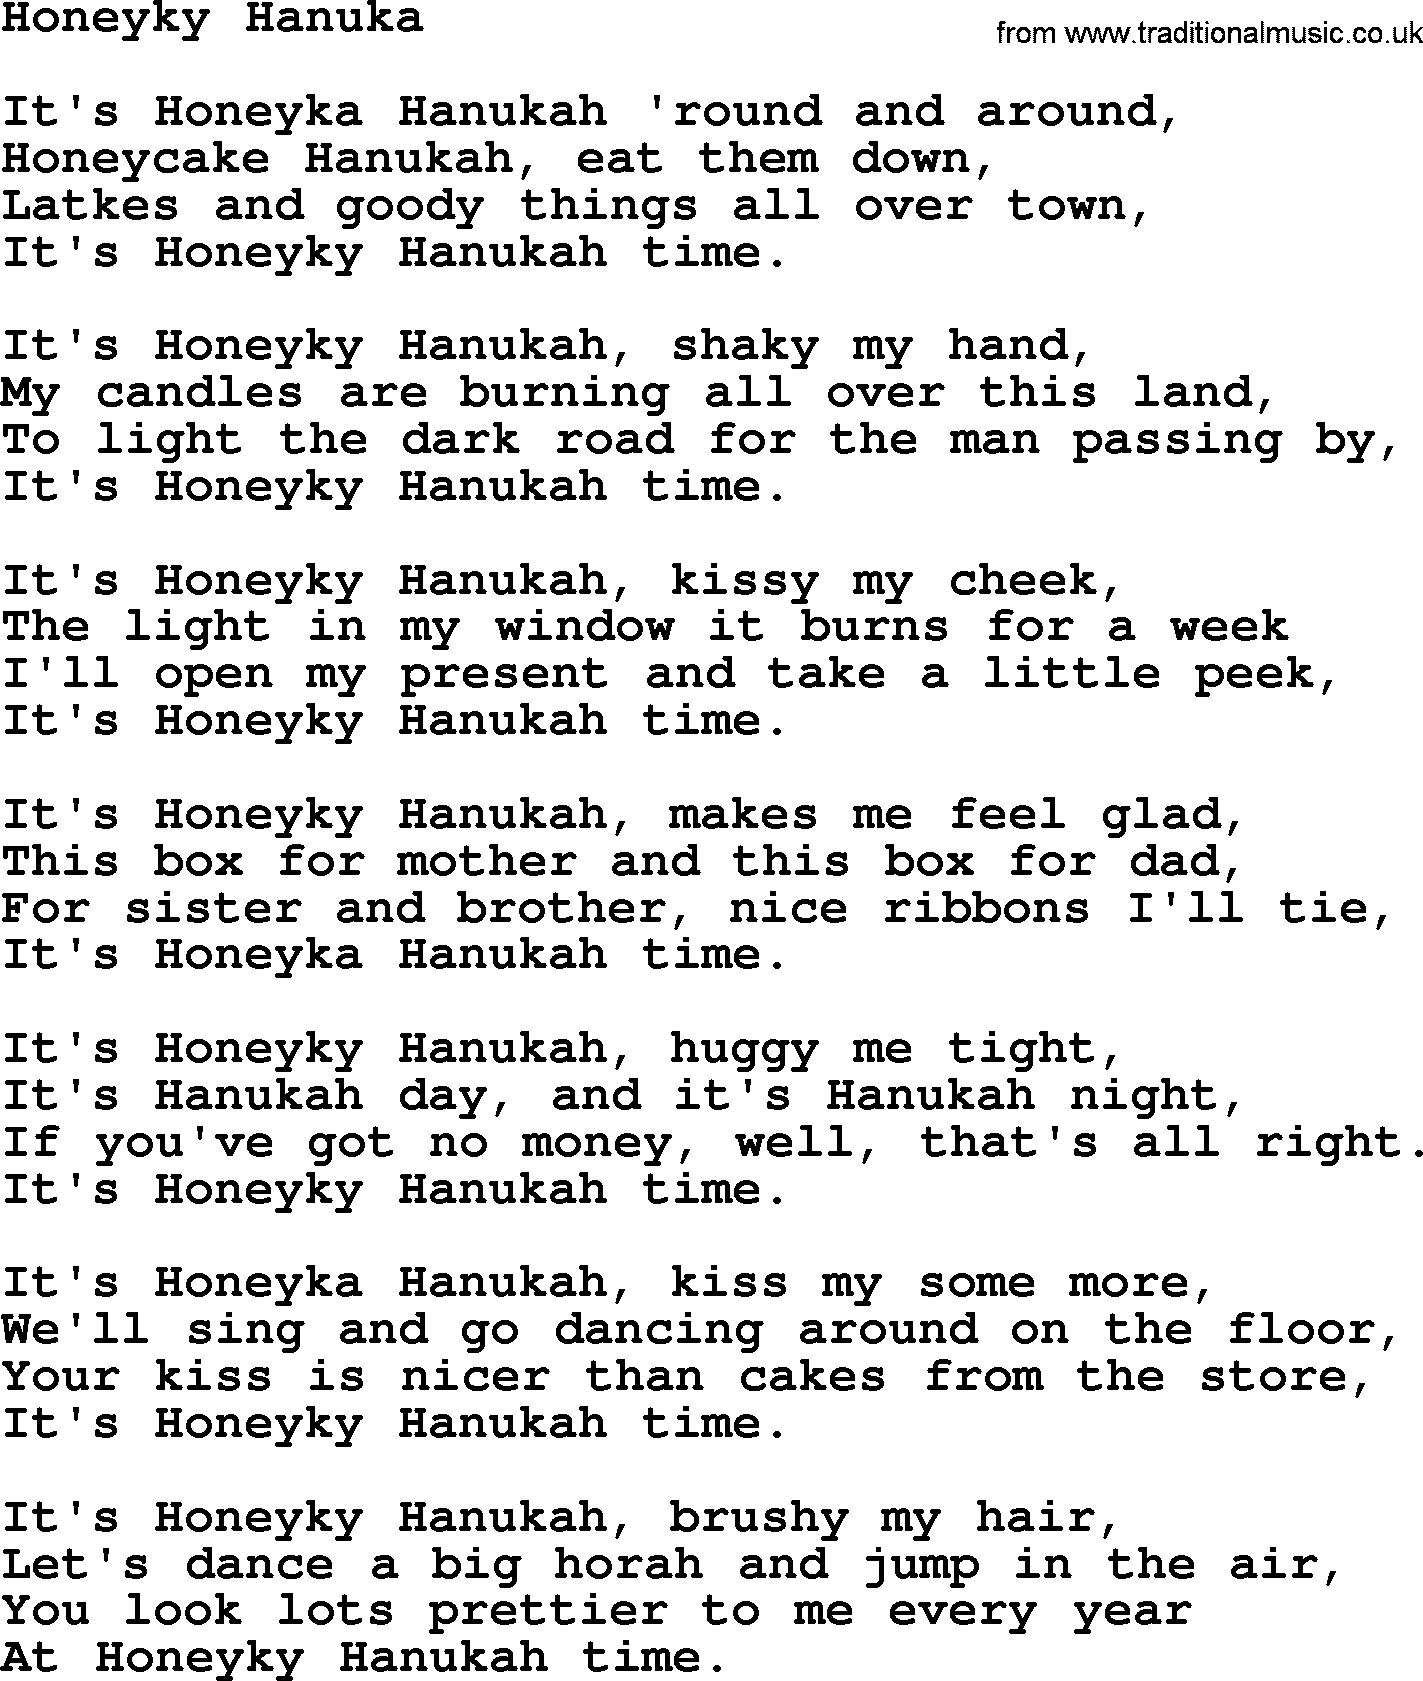 Woody Guthrie song Honeyky Hanuka lyrics